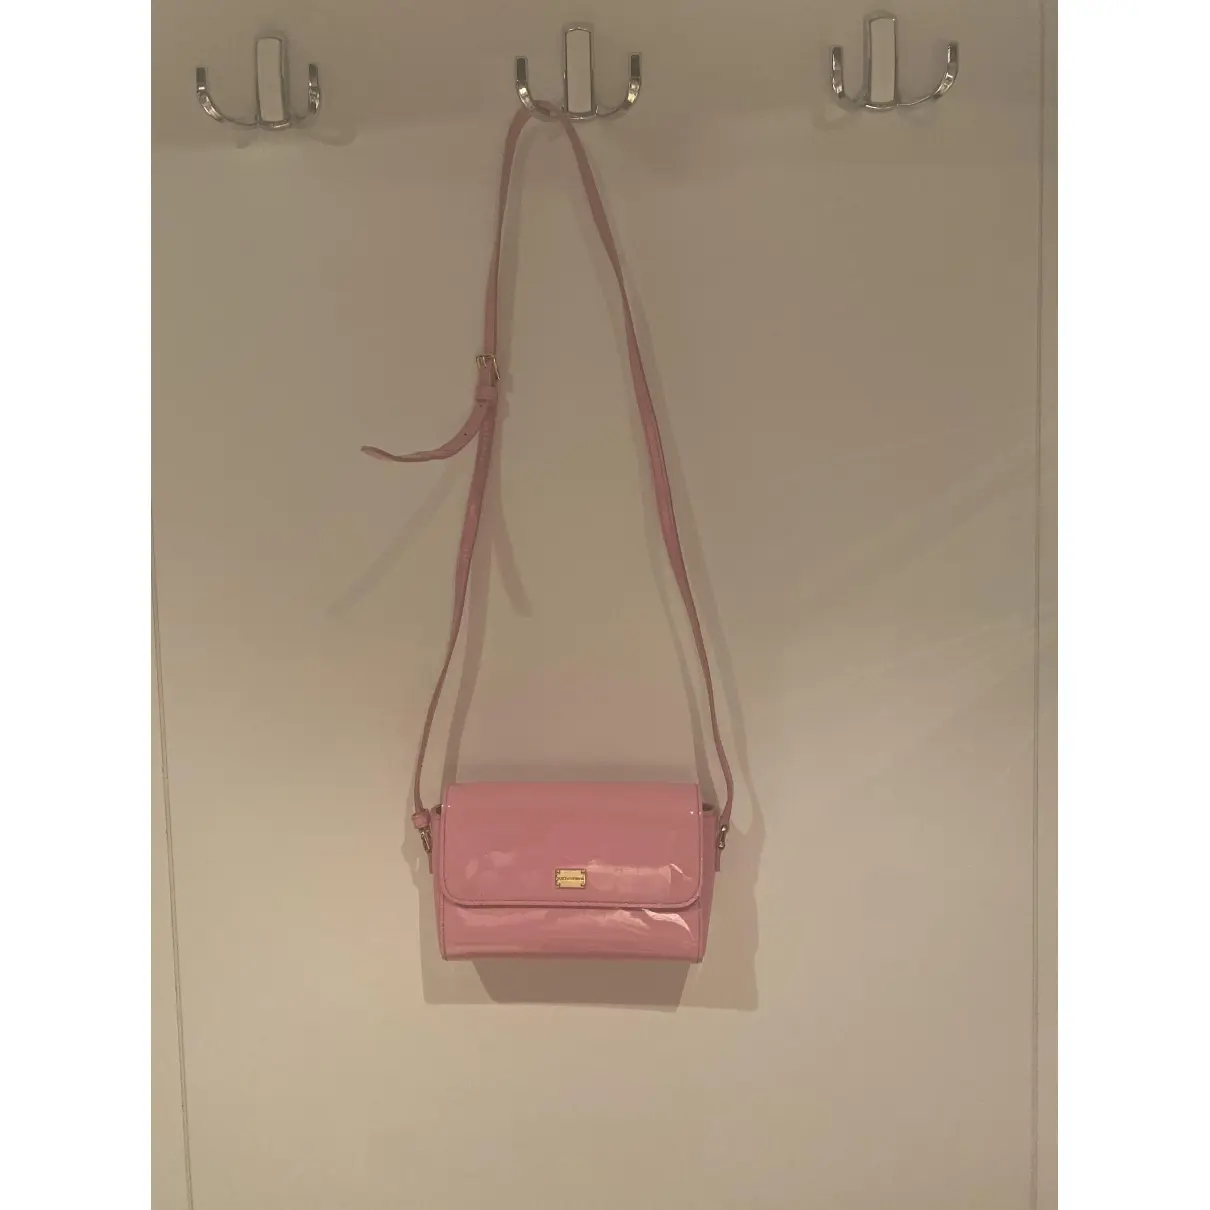 Patent leather bag & pencil case Dolce & Gabbana